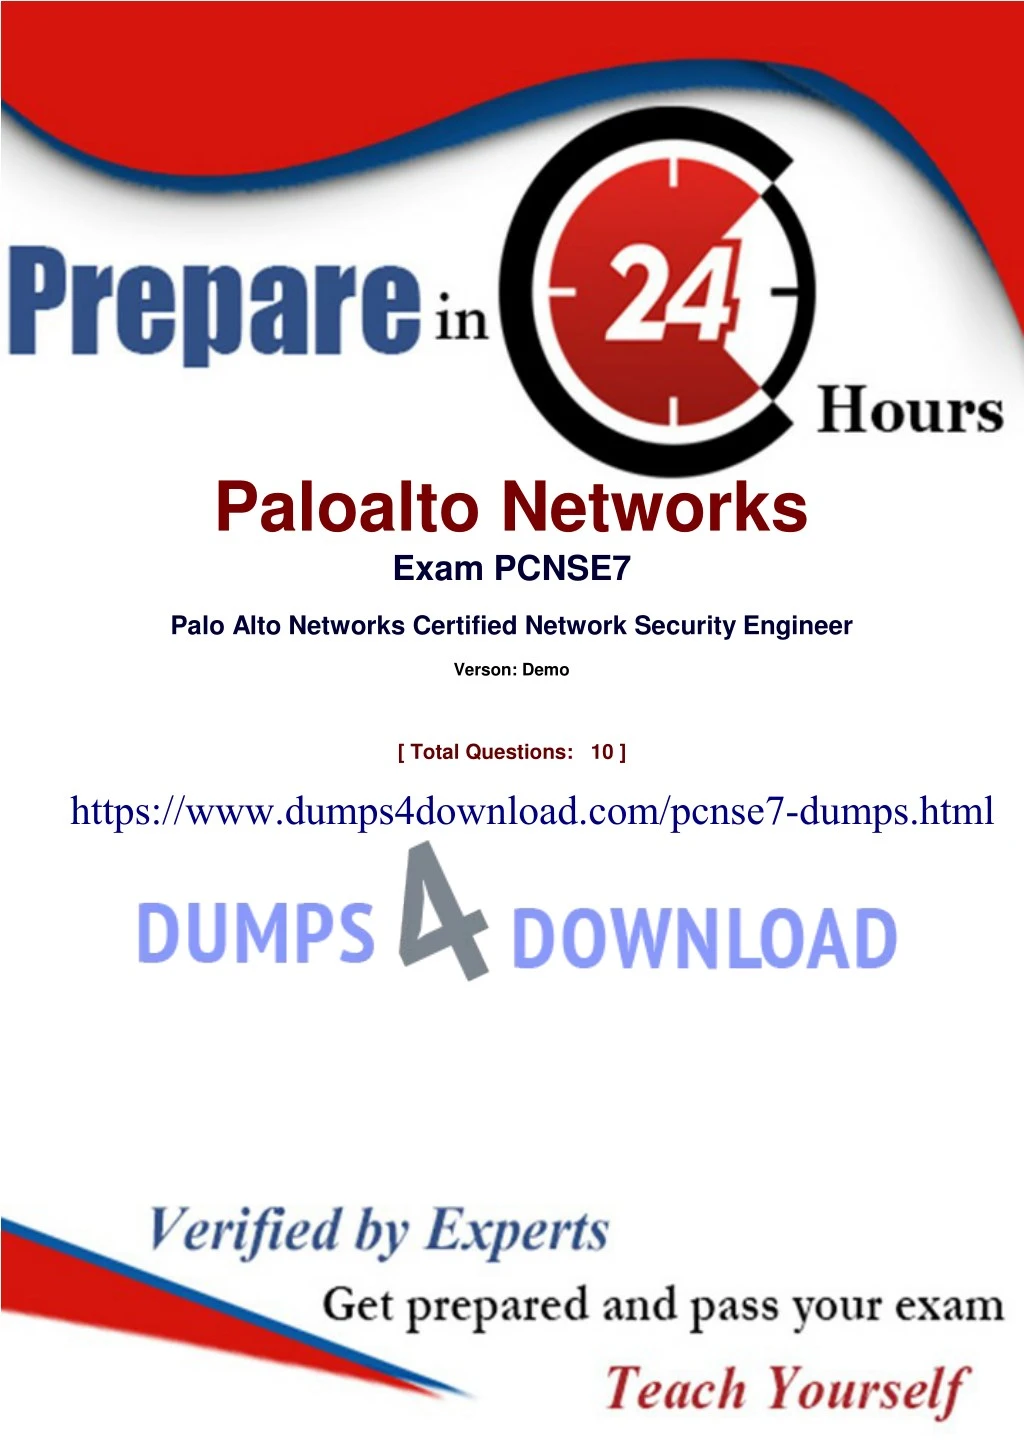 paloalto networks exam pcnse7